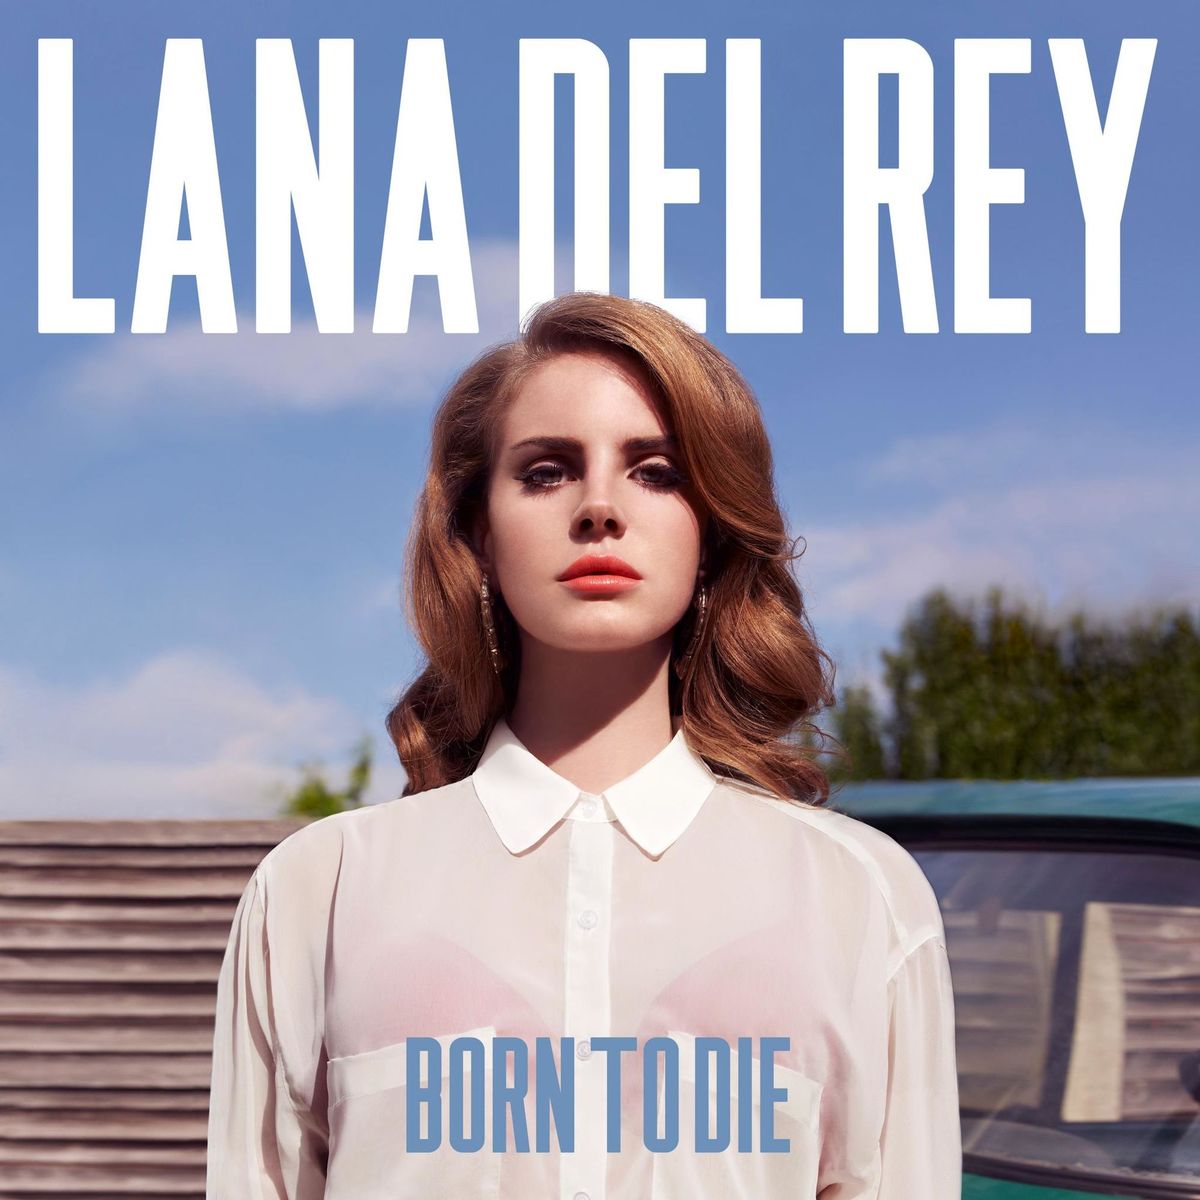 Born to Die cover viser Lana del Rey stående foran et hegn